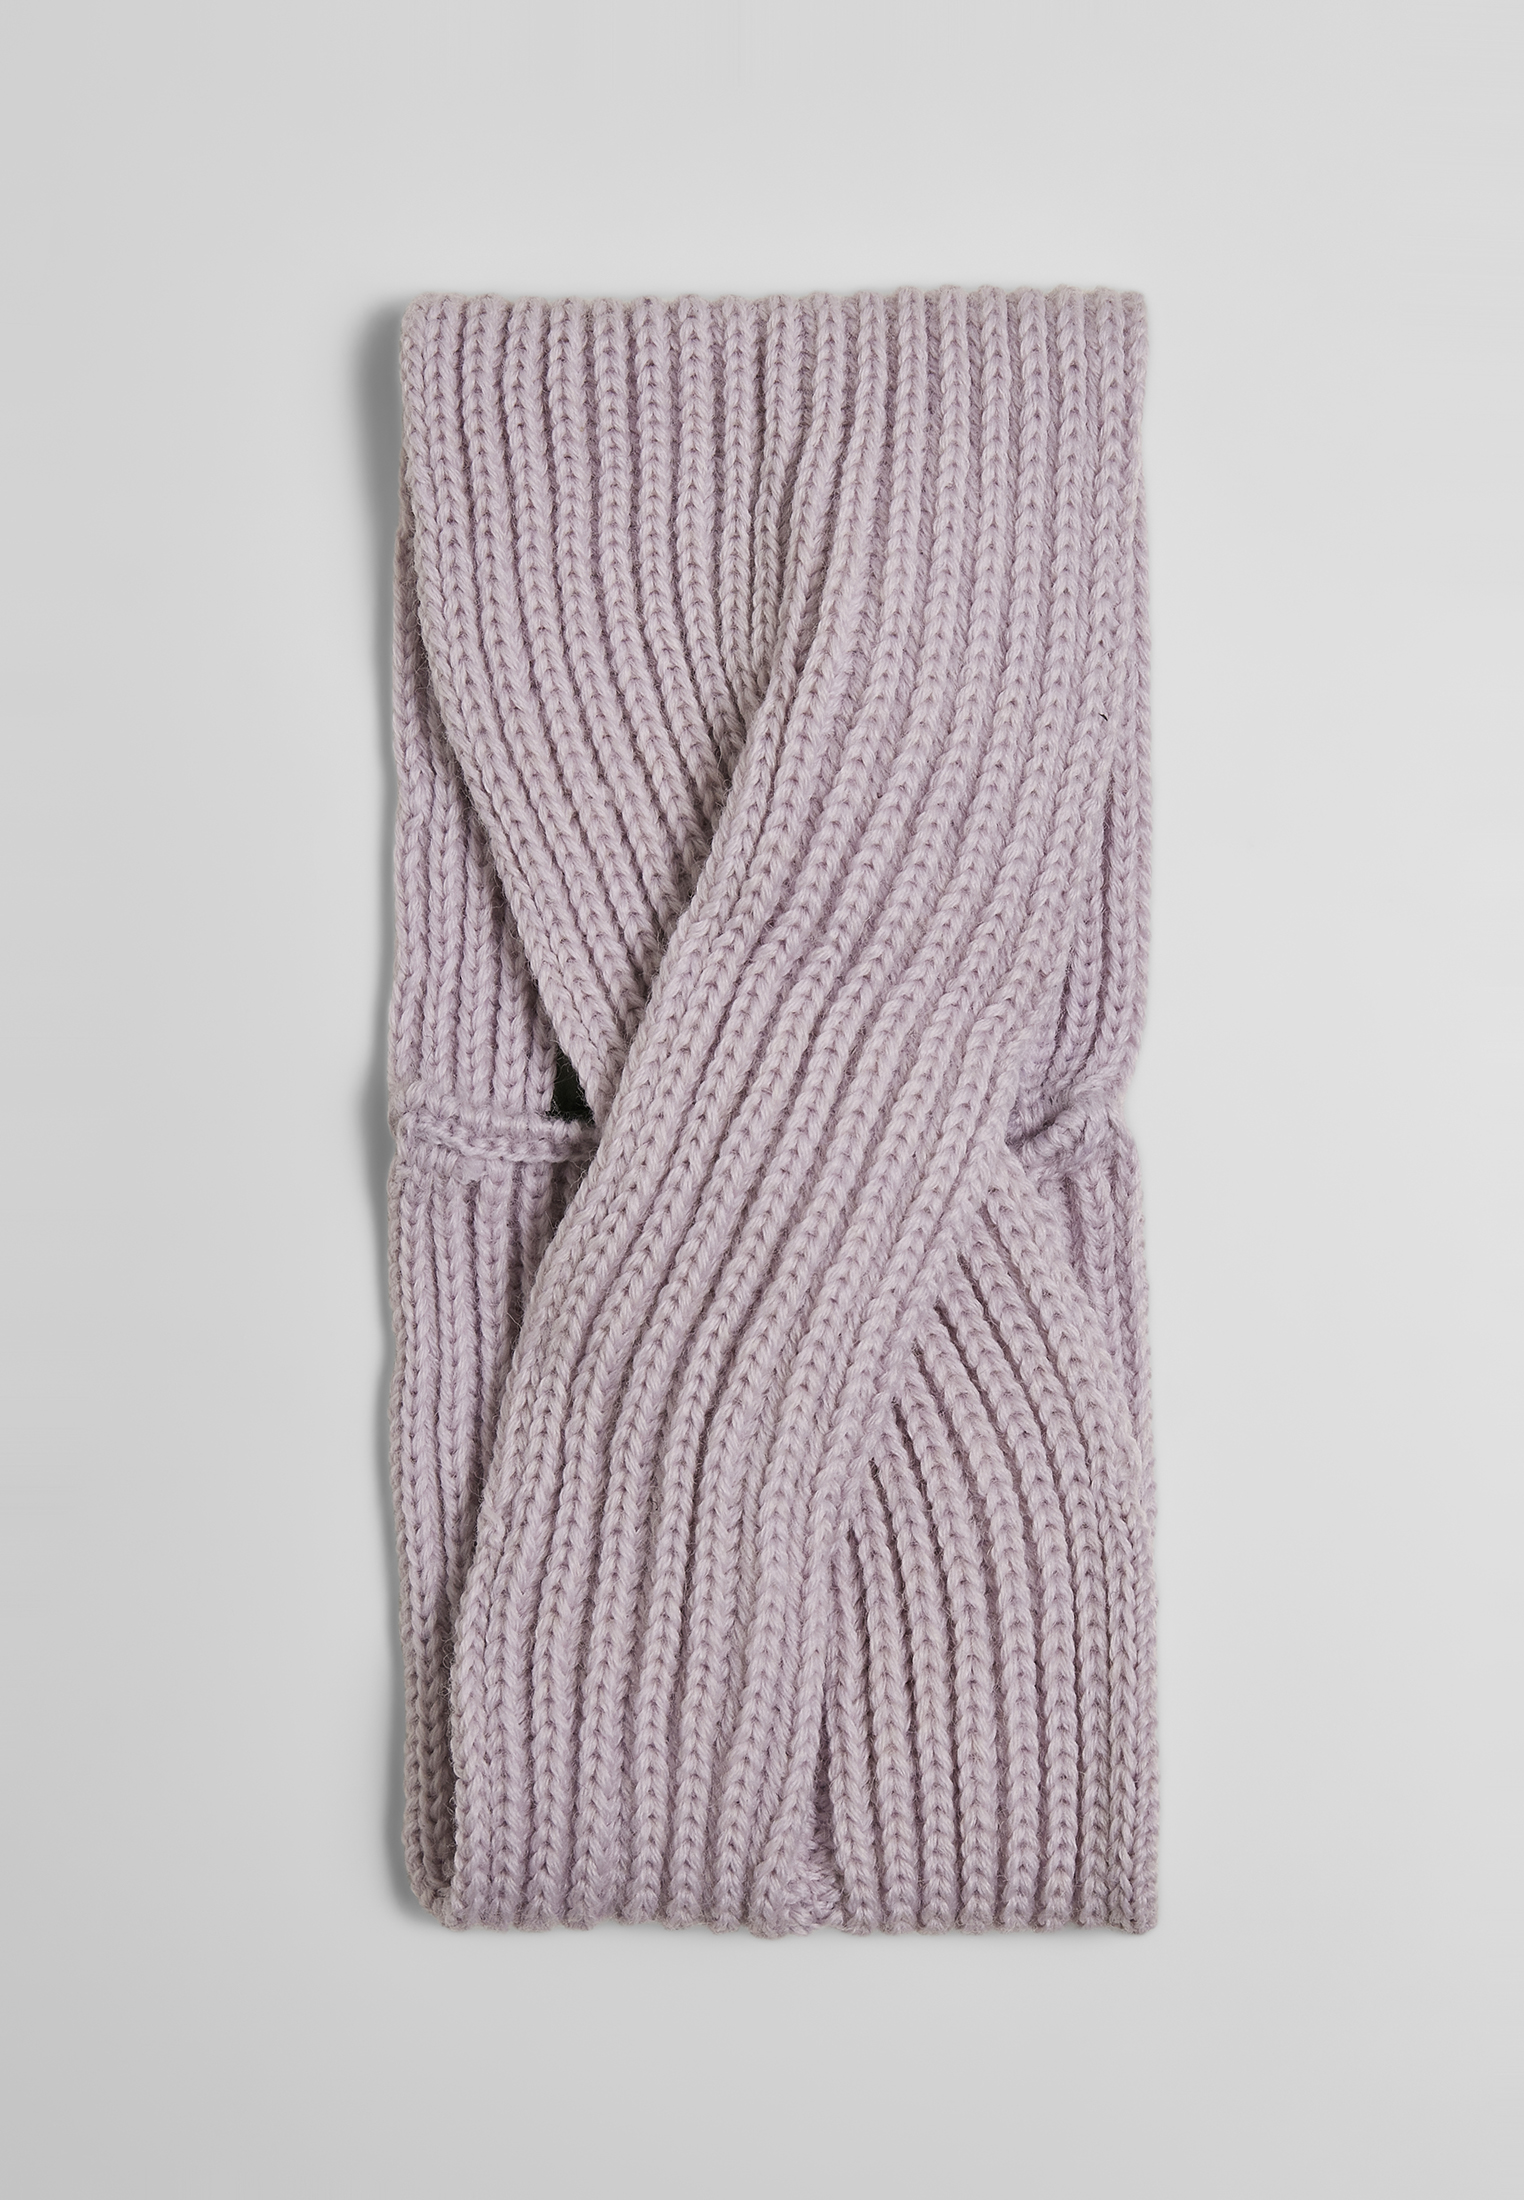 Knitted lilac headband